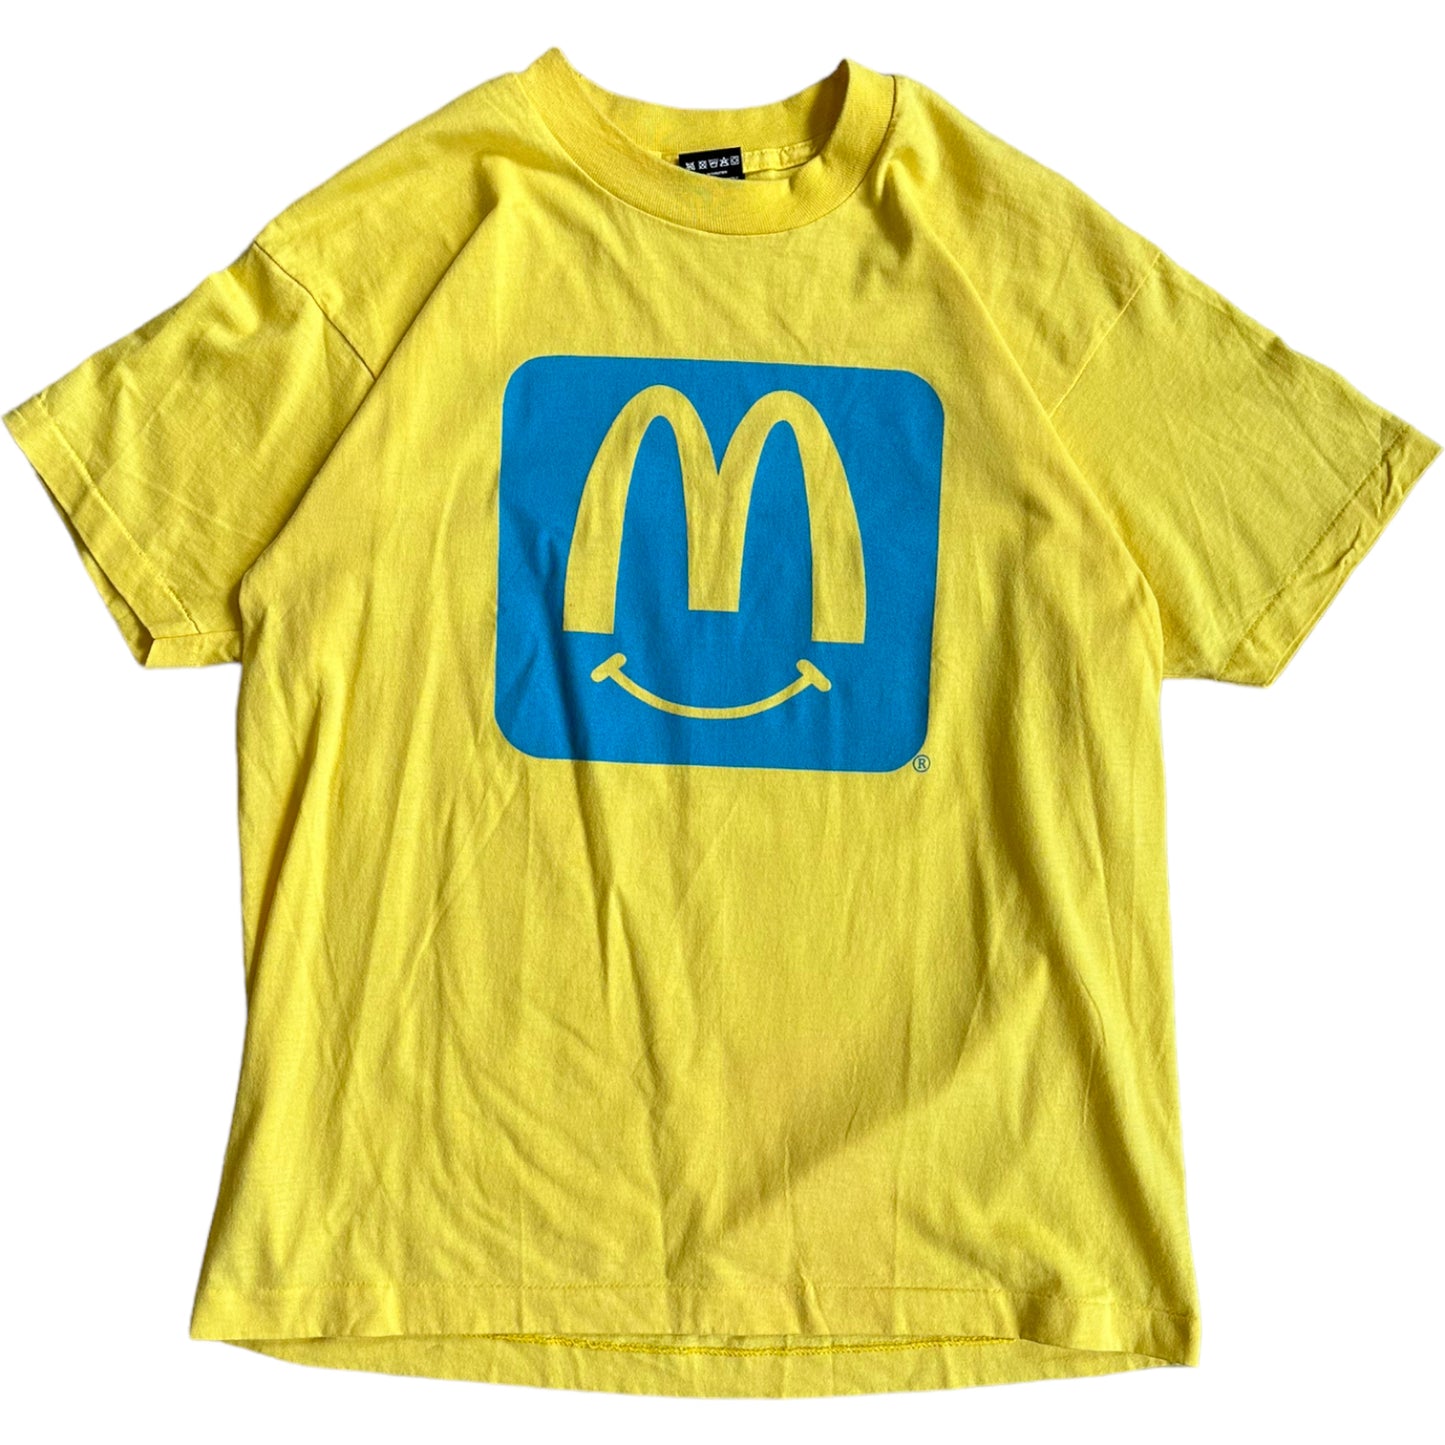 ‘90s McDonalds Tee- M